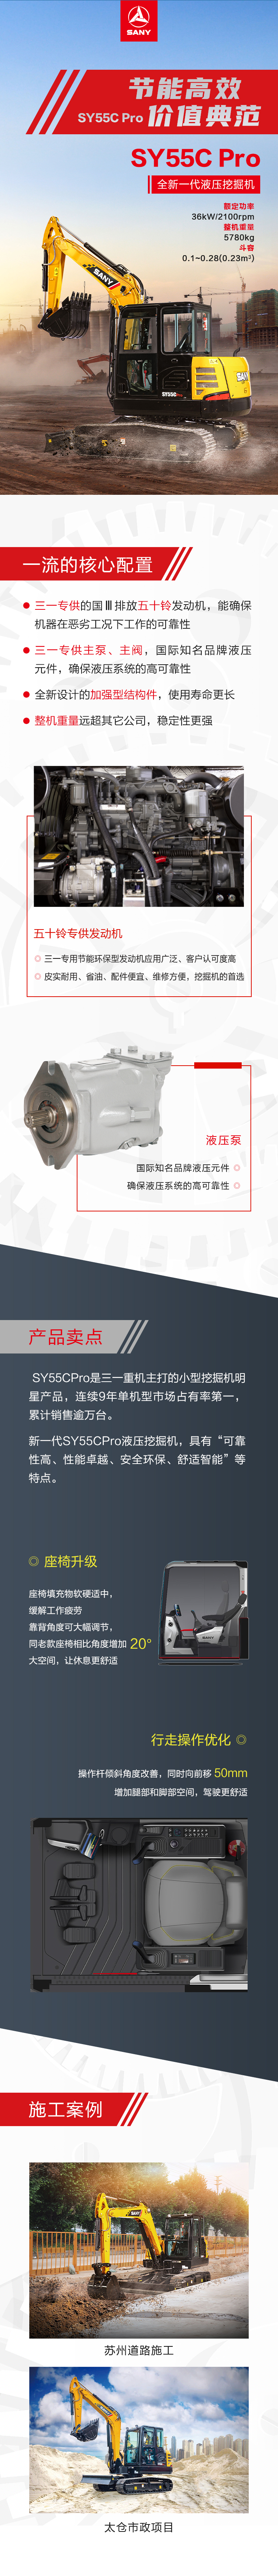 SY55C Pro.jpg